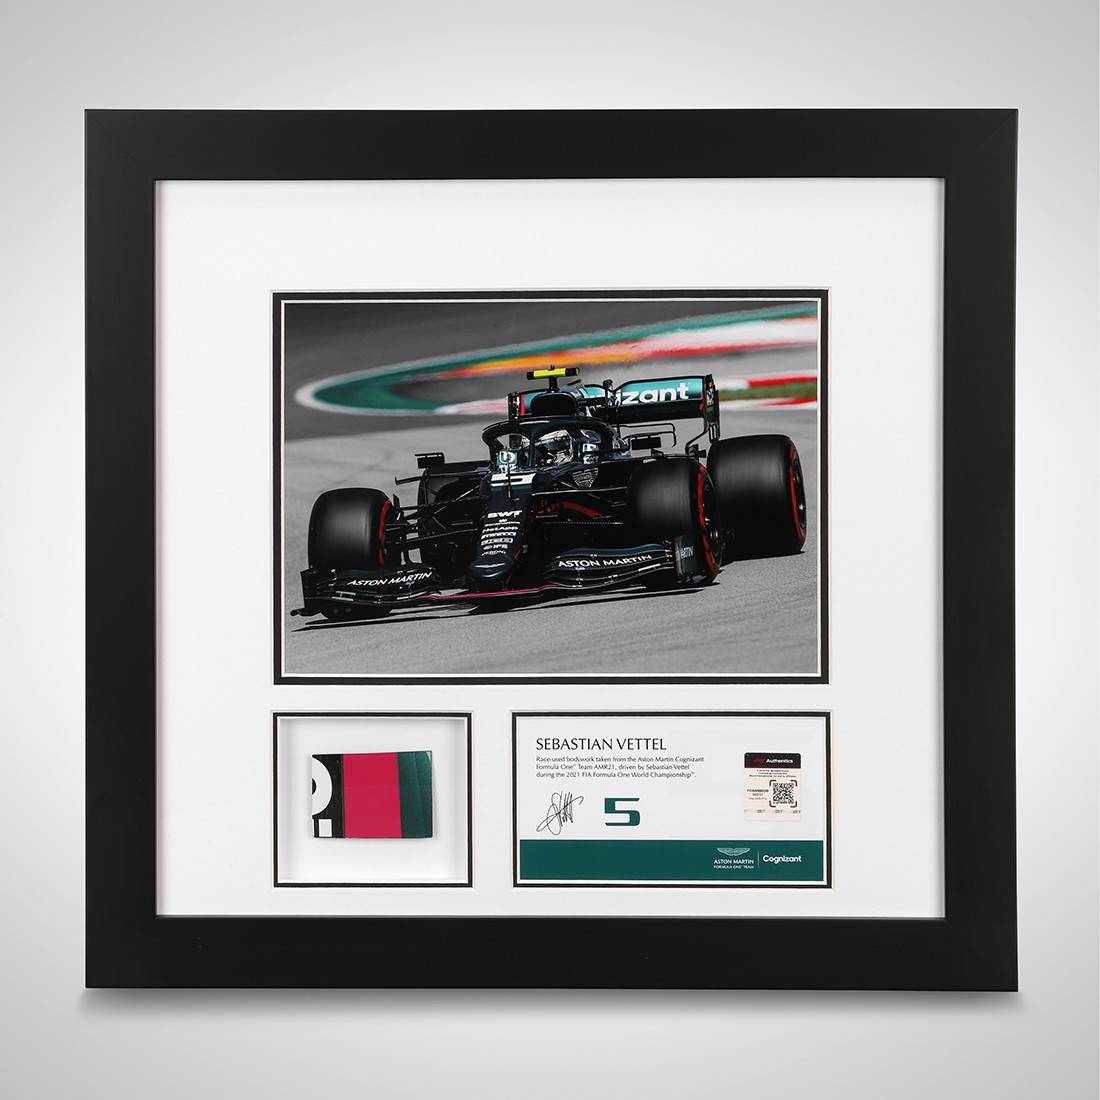 New Lewis Hamilton Valtteri Bottas signed autographed print photo F1 FRAMED 